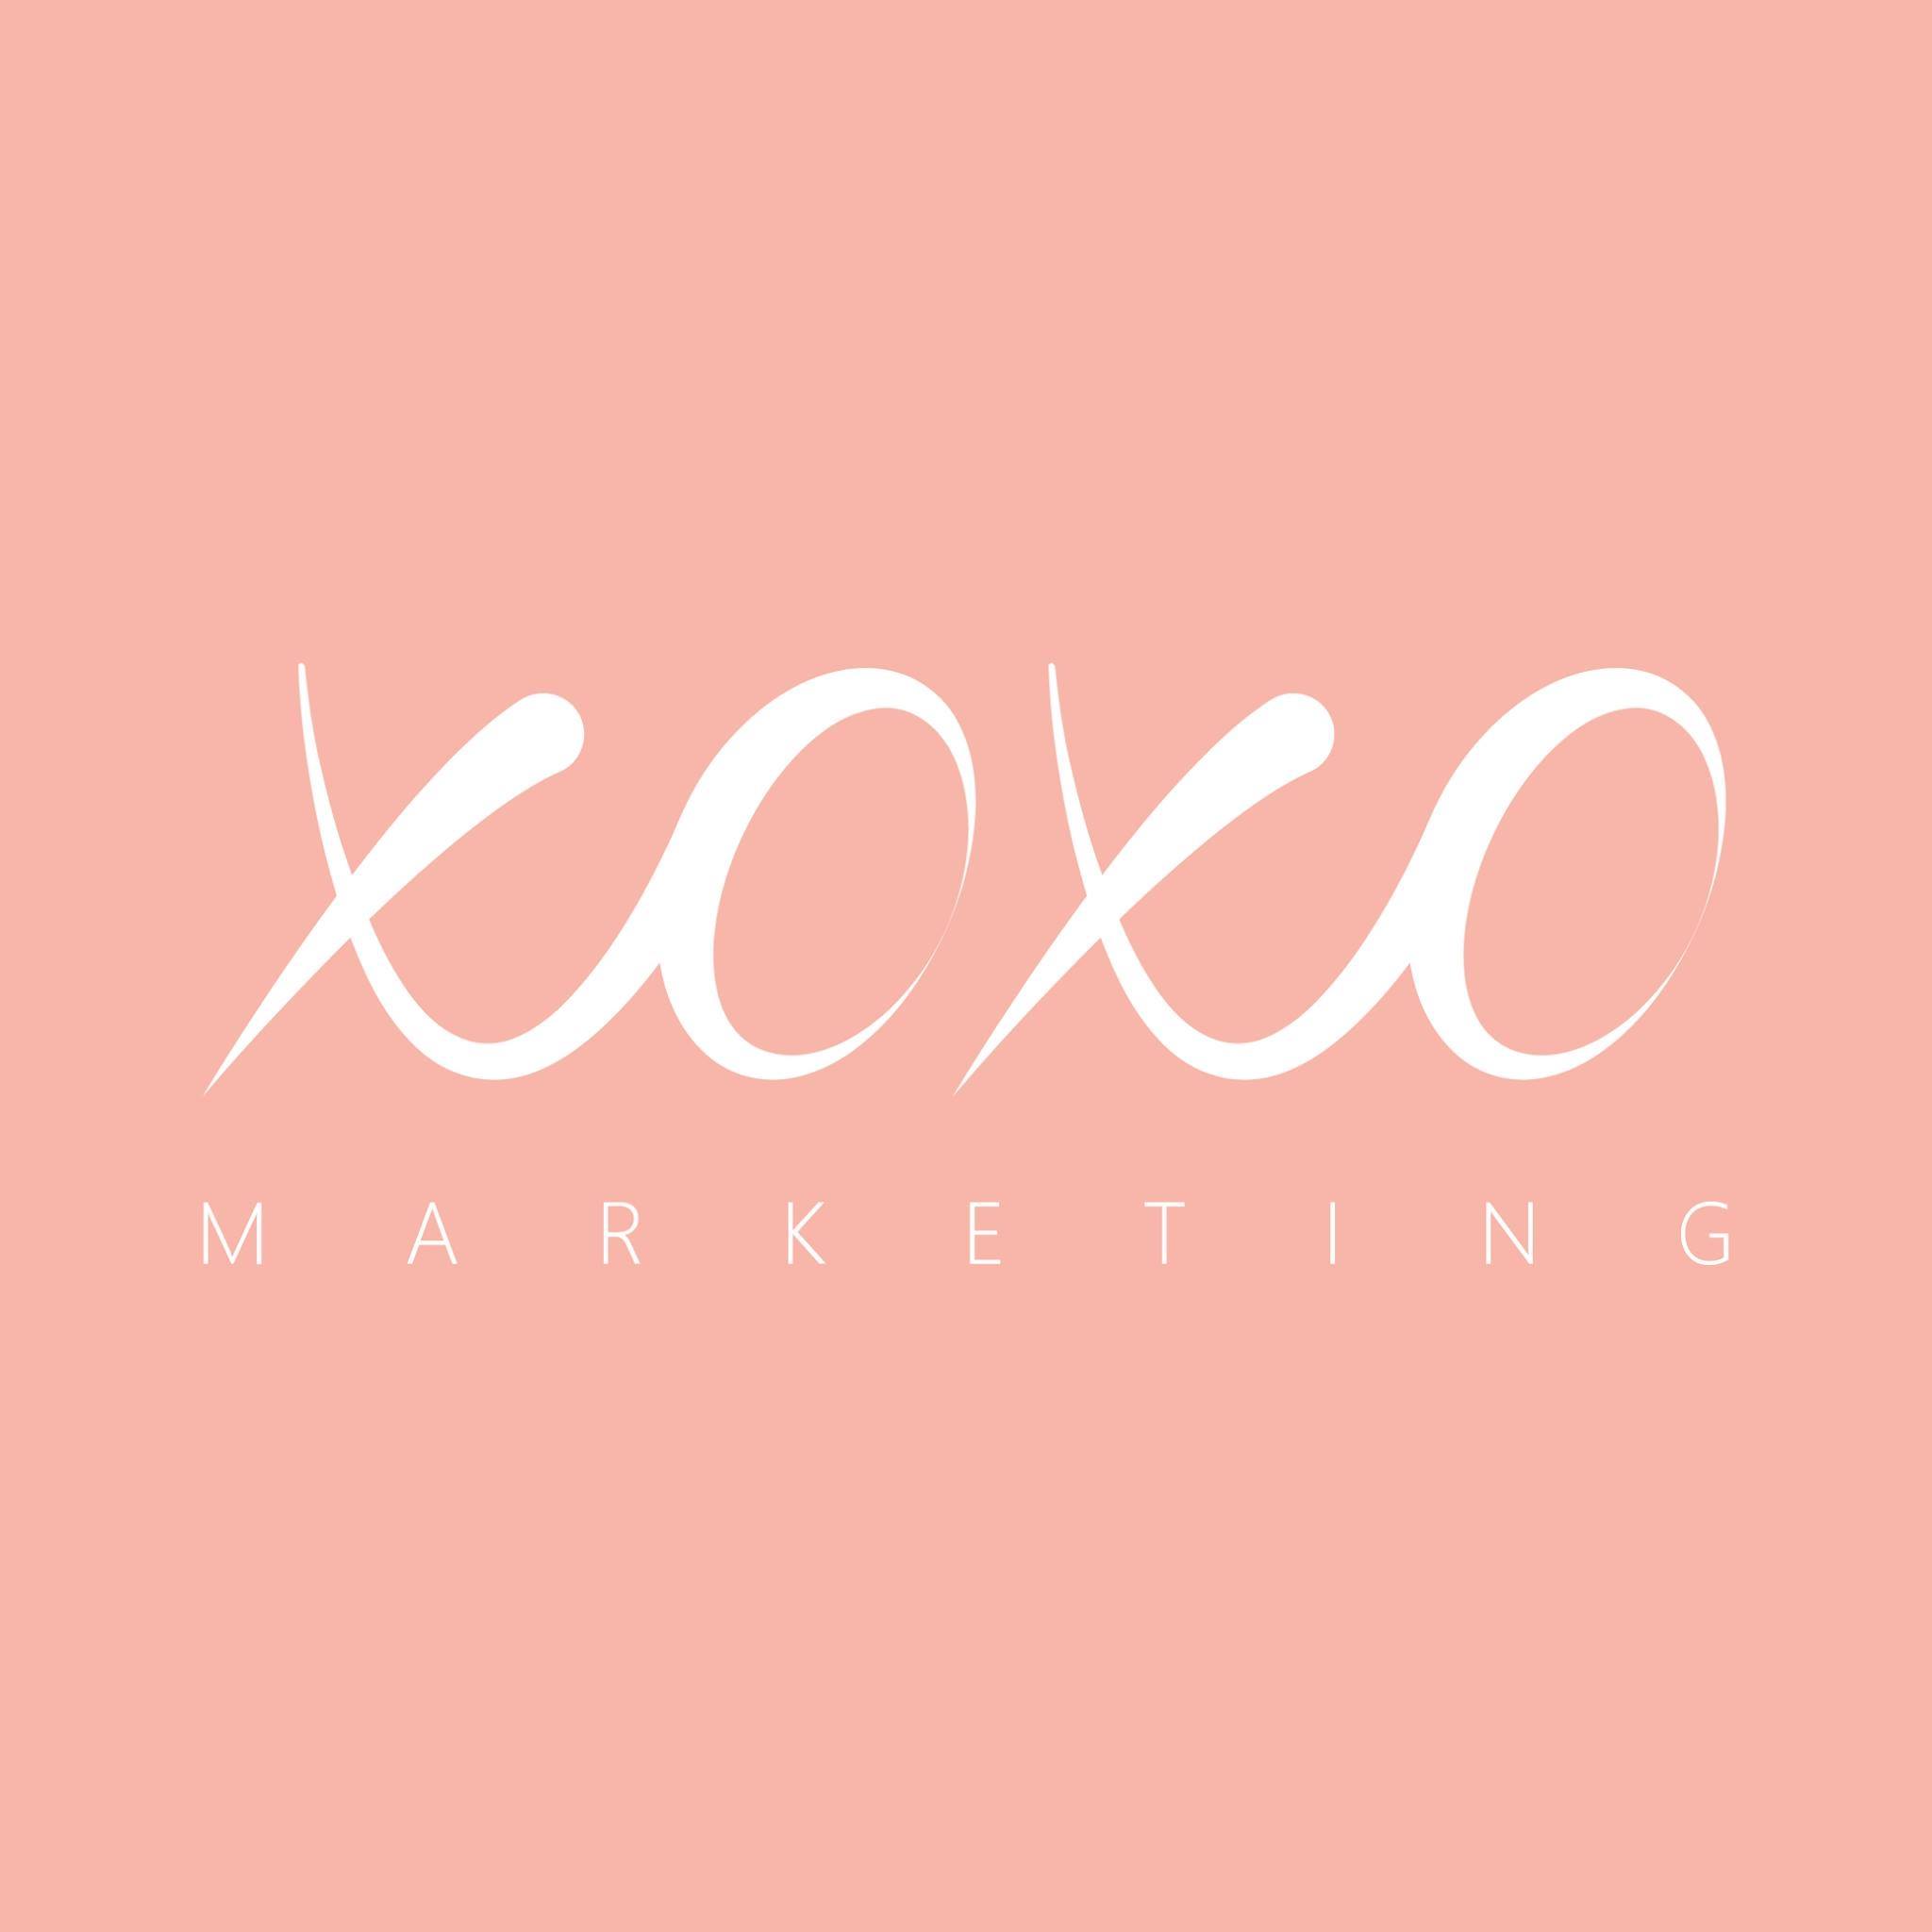 Xoxo Marketing